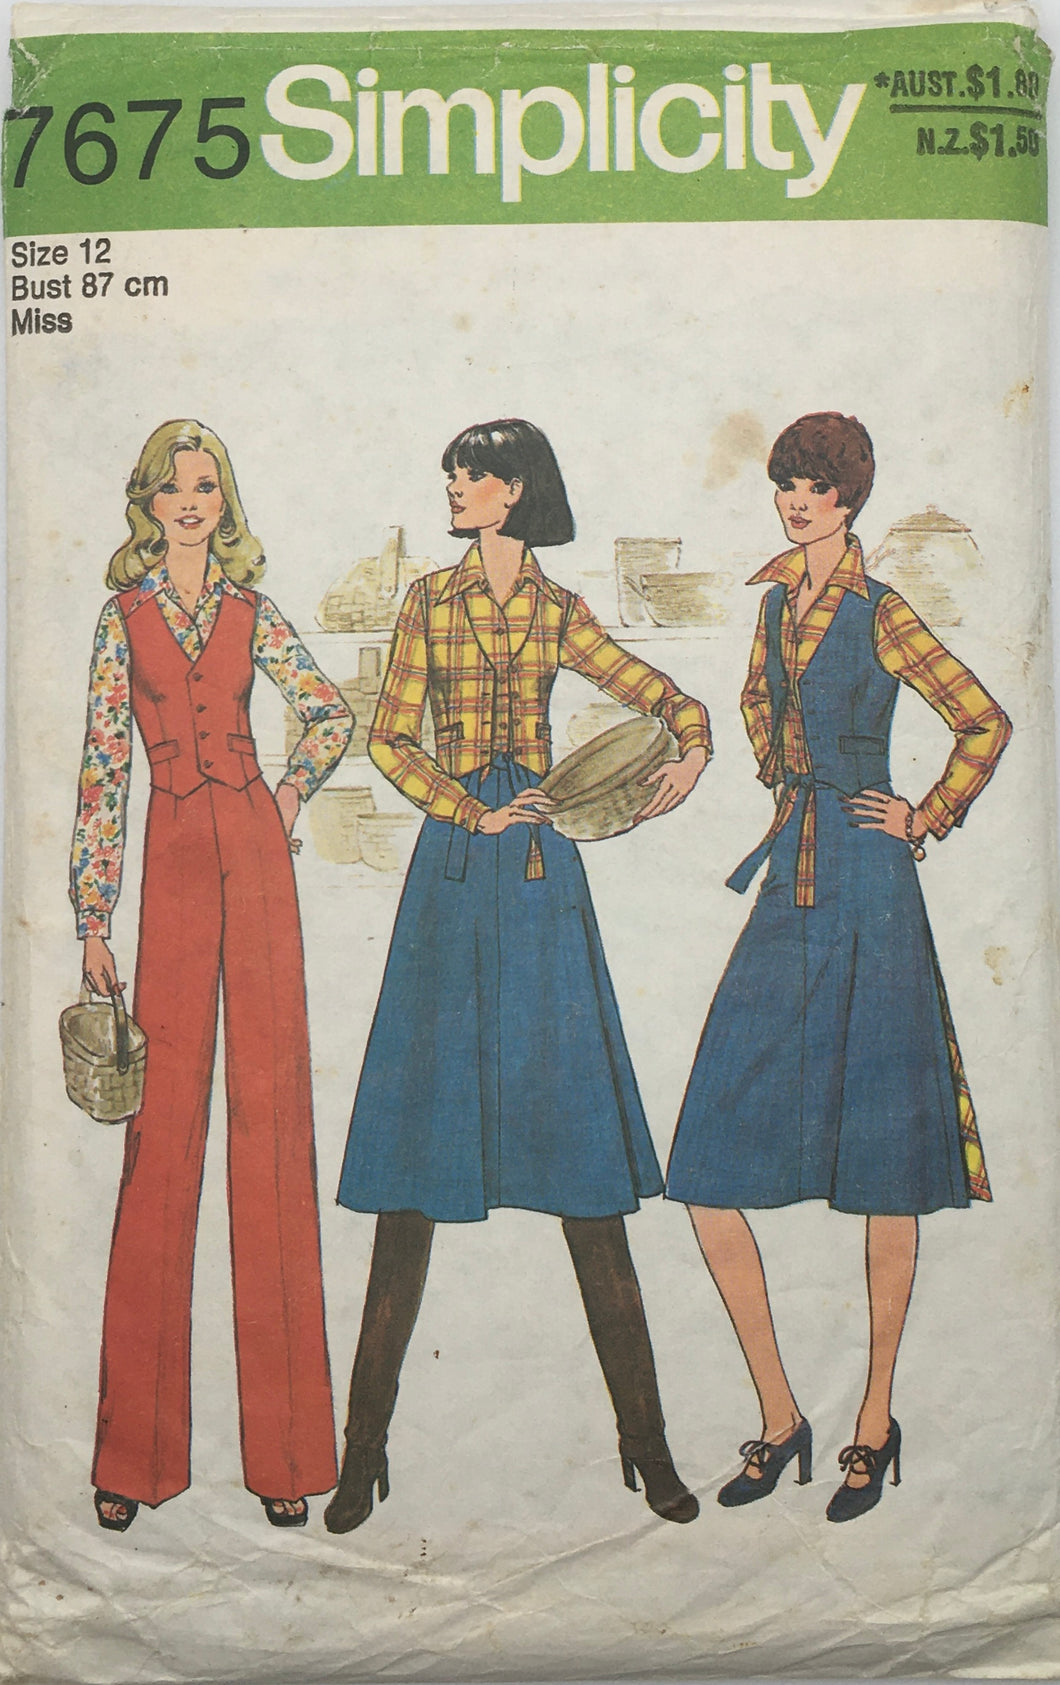 1978 Vintage Sewing Pattern: Simplicity 7675